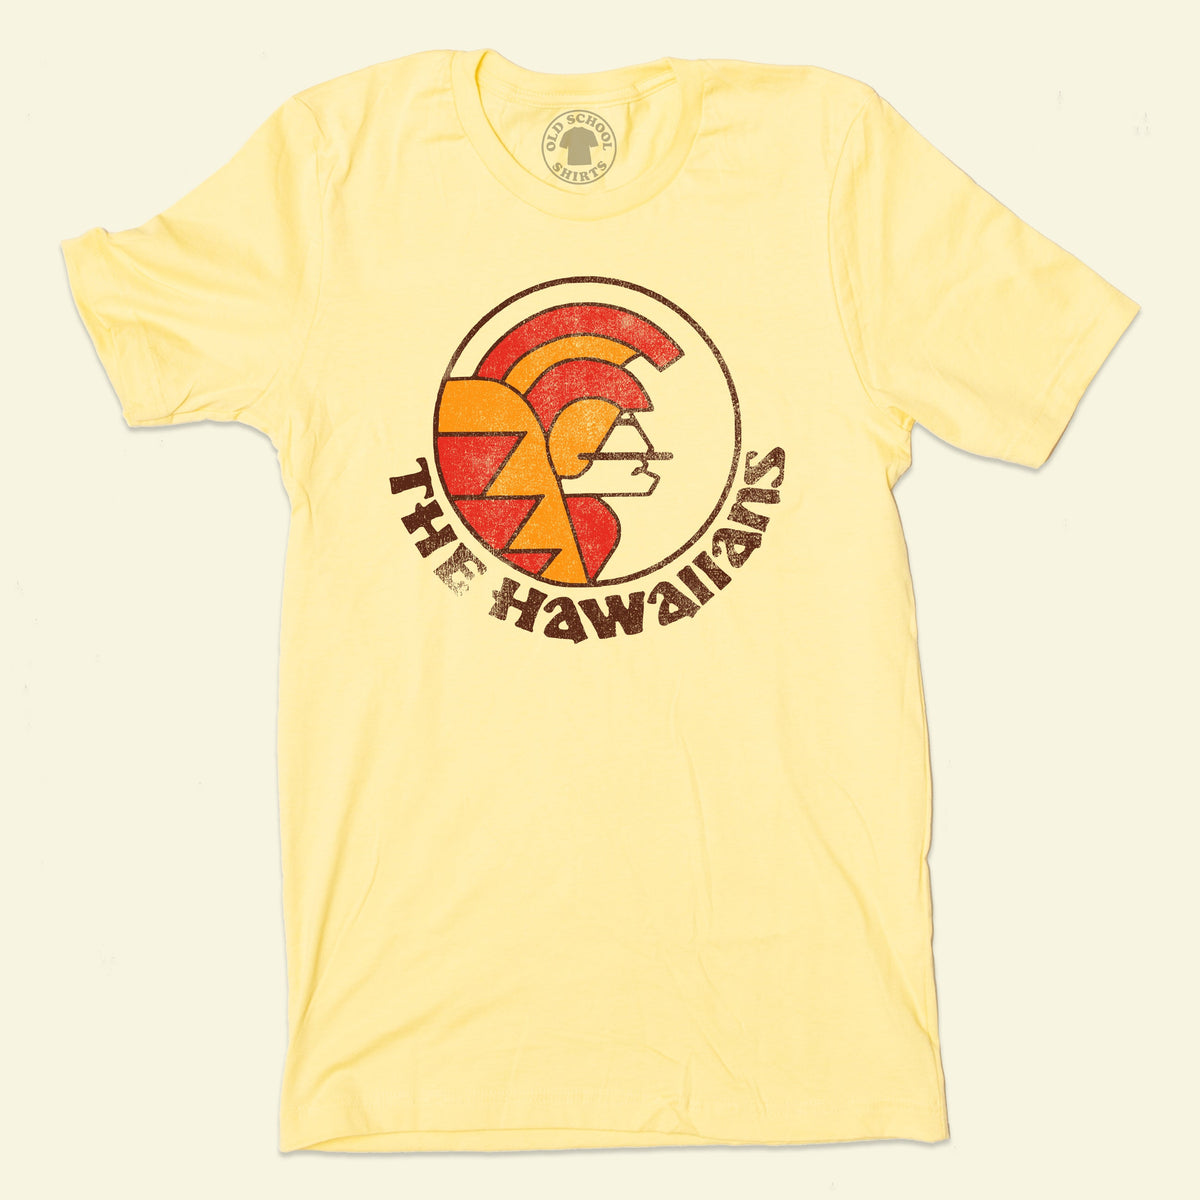 The Hawaiians WFL T-shirt